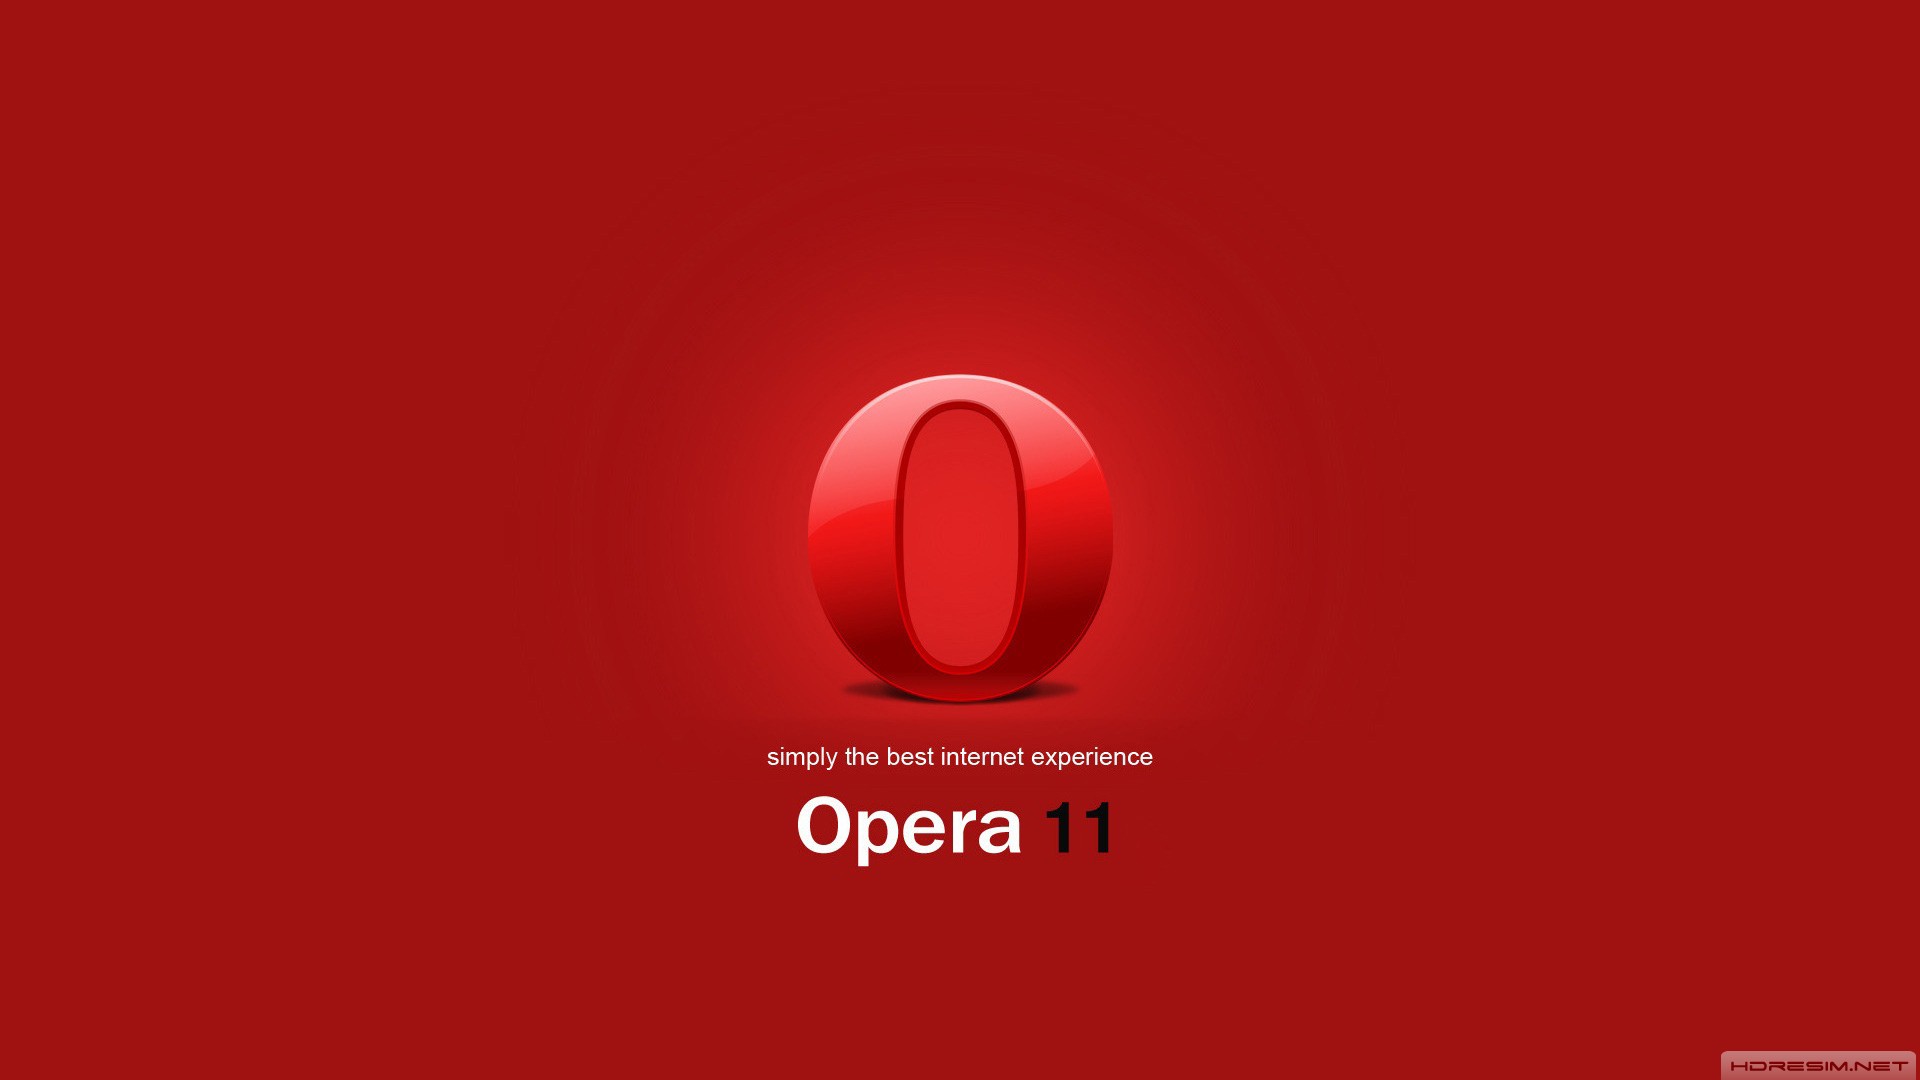 opera,yazılım,logo,tarayıcı,opera 11